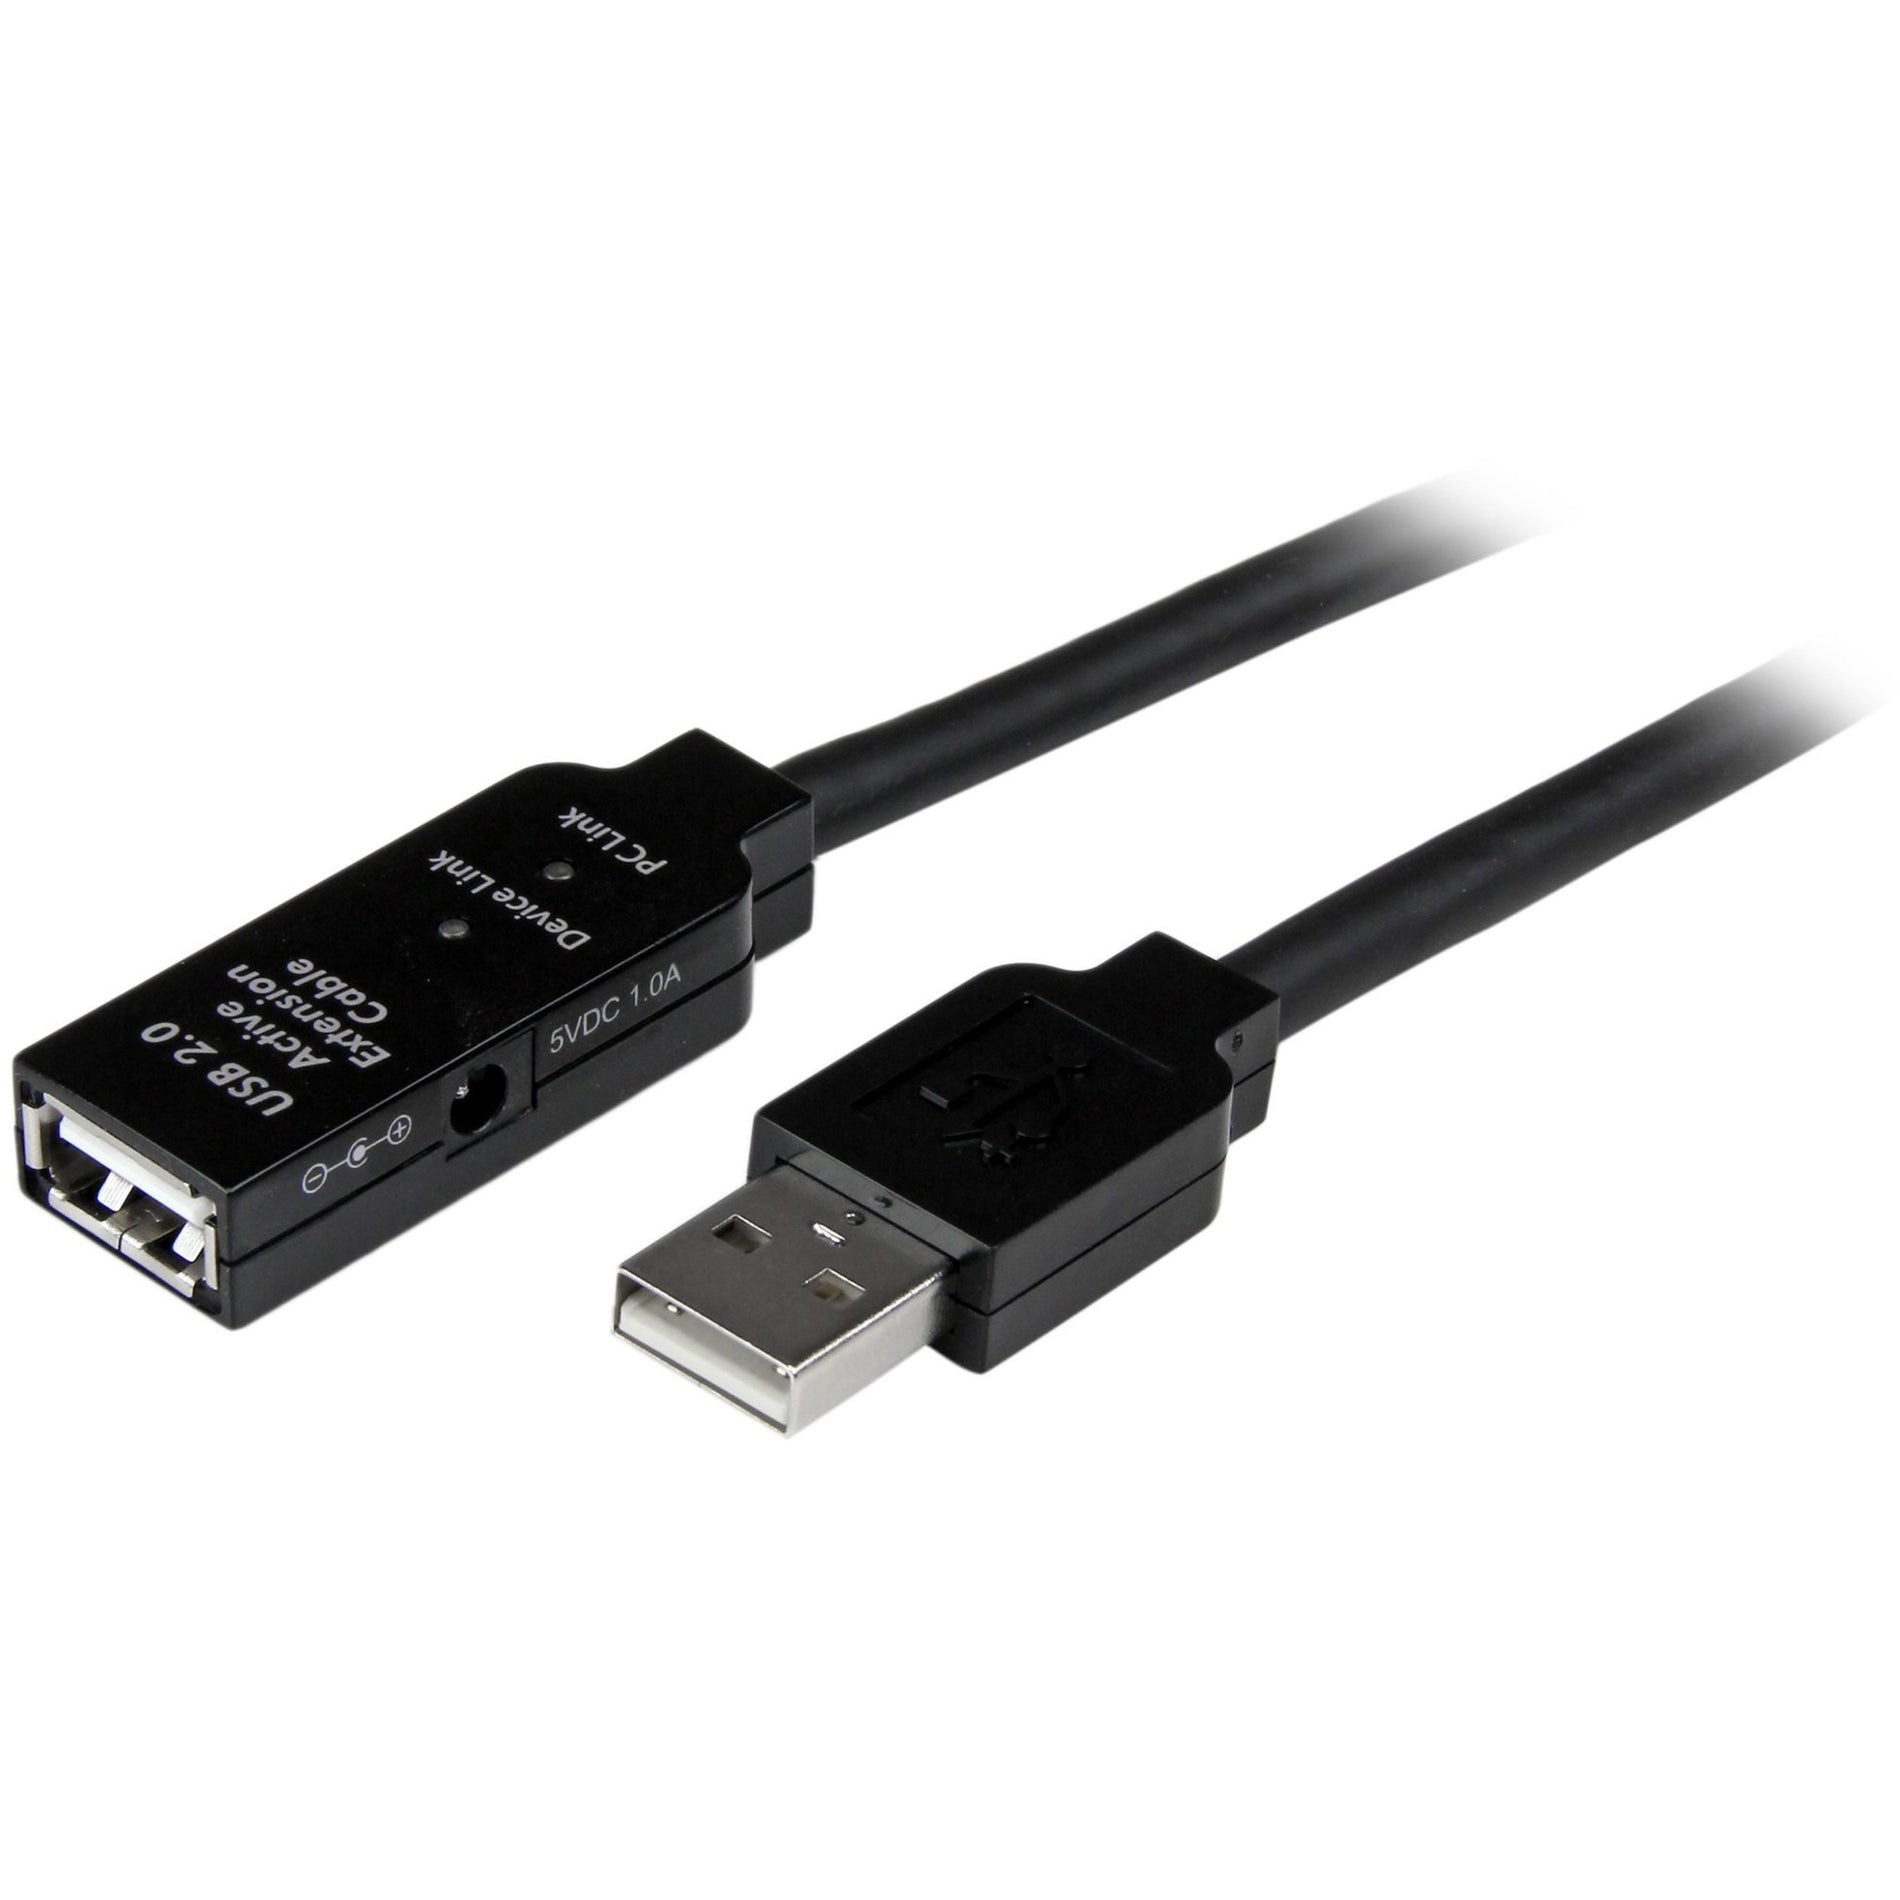 StarTech.com USB2AAEXT15M 15m USB 2.0 Active Extension Cable - M/F, 49.21 ft Data Transfer Cable, 480 Mbit/s, Black